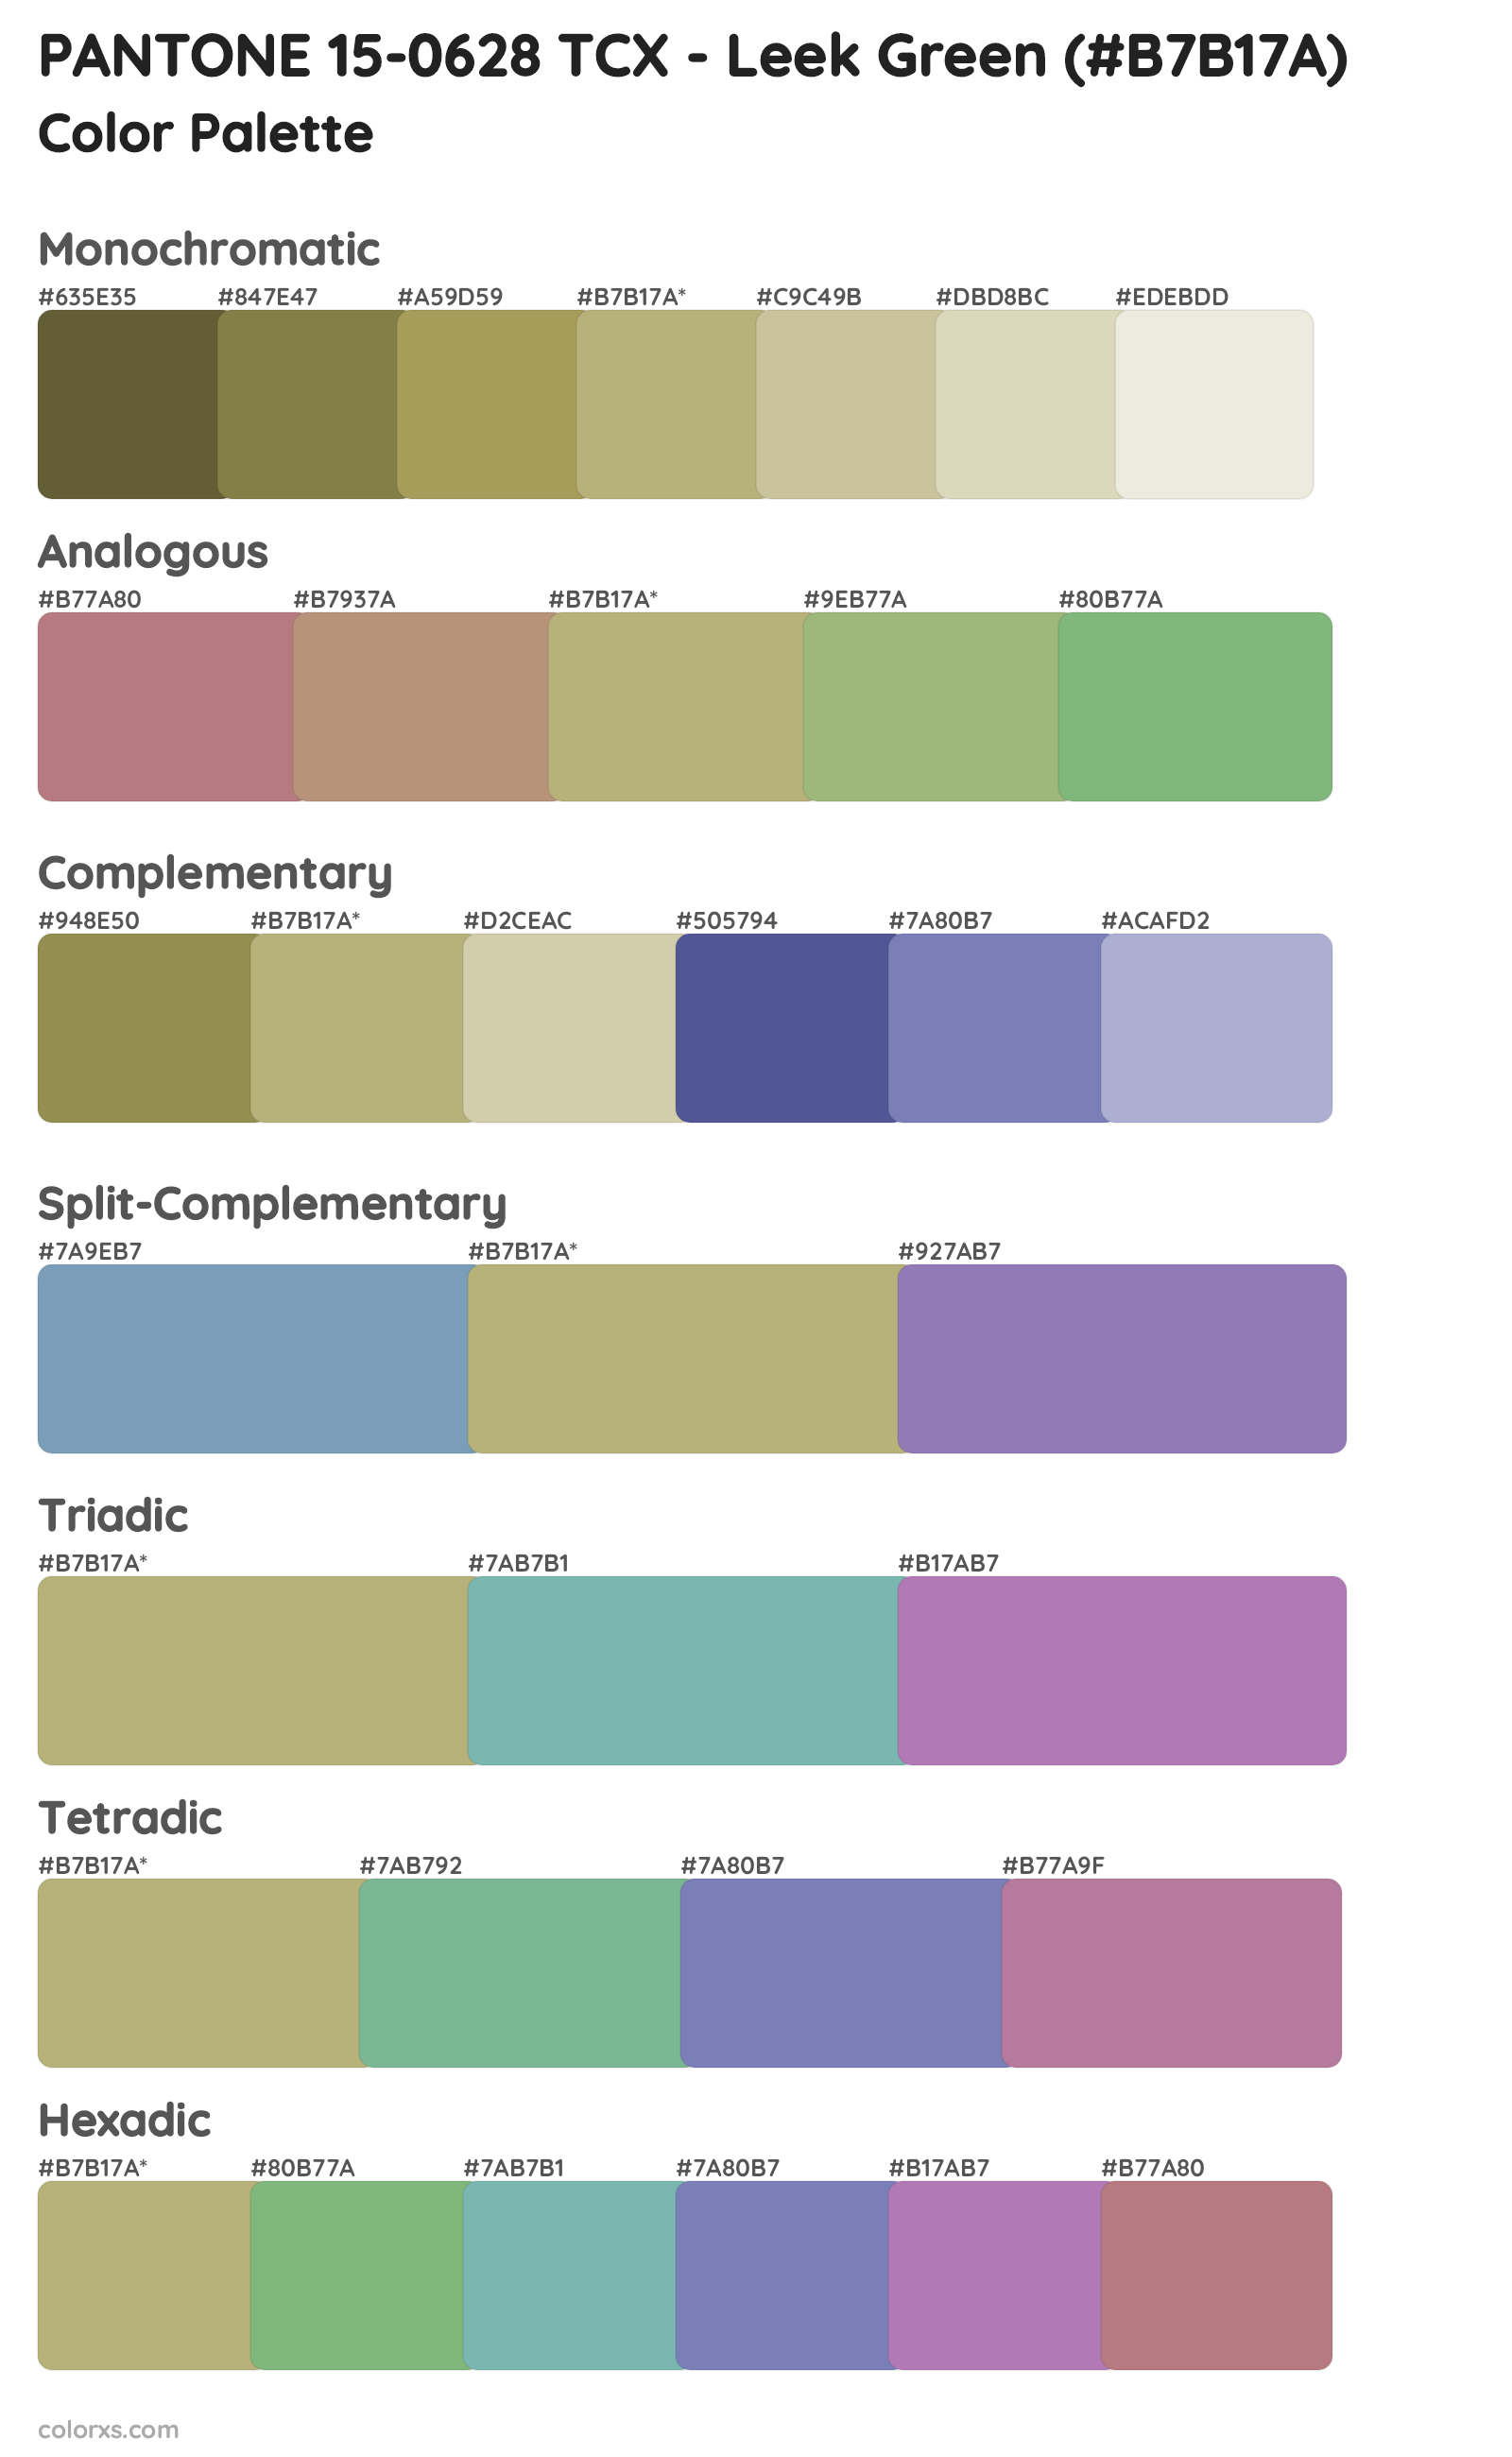 PANTONE 15-0628 TCX - Leek Green Color Scheme Palettes